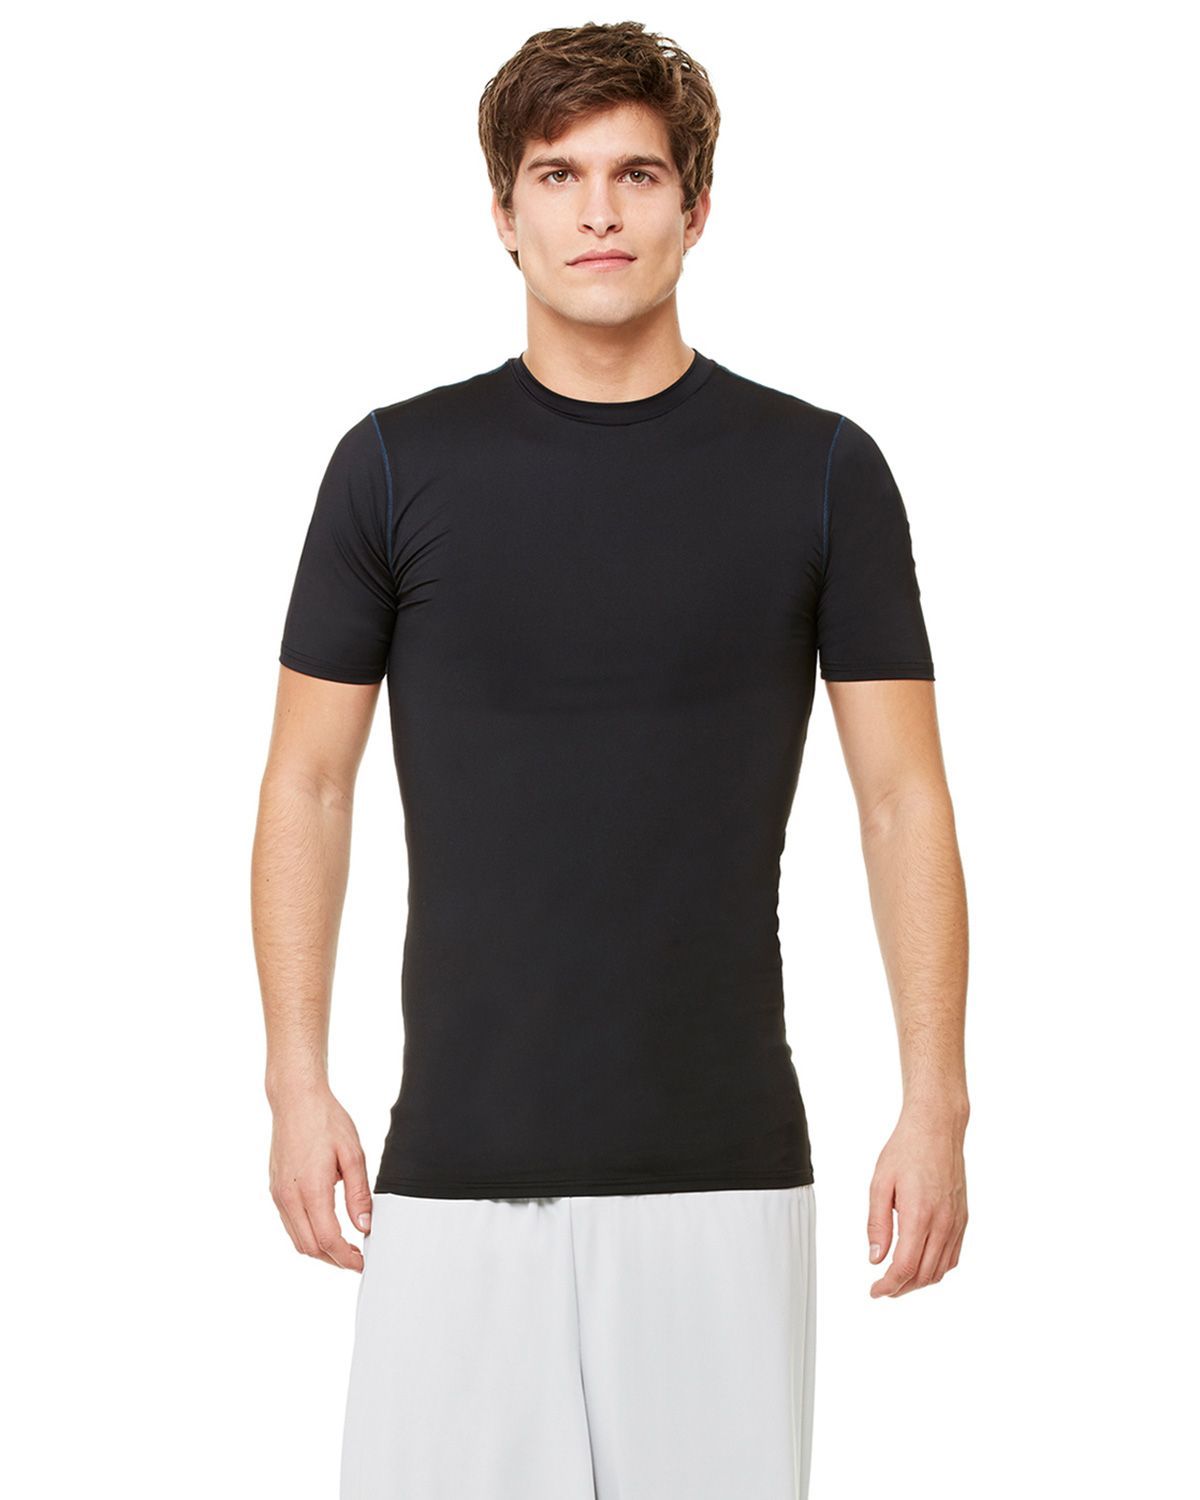 All Sport M1007 Men's Short-Sleeve Compression T-Shirt